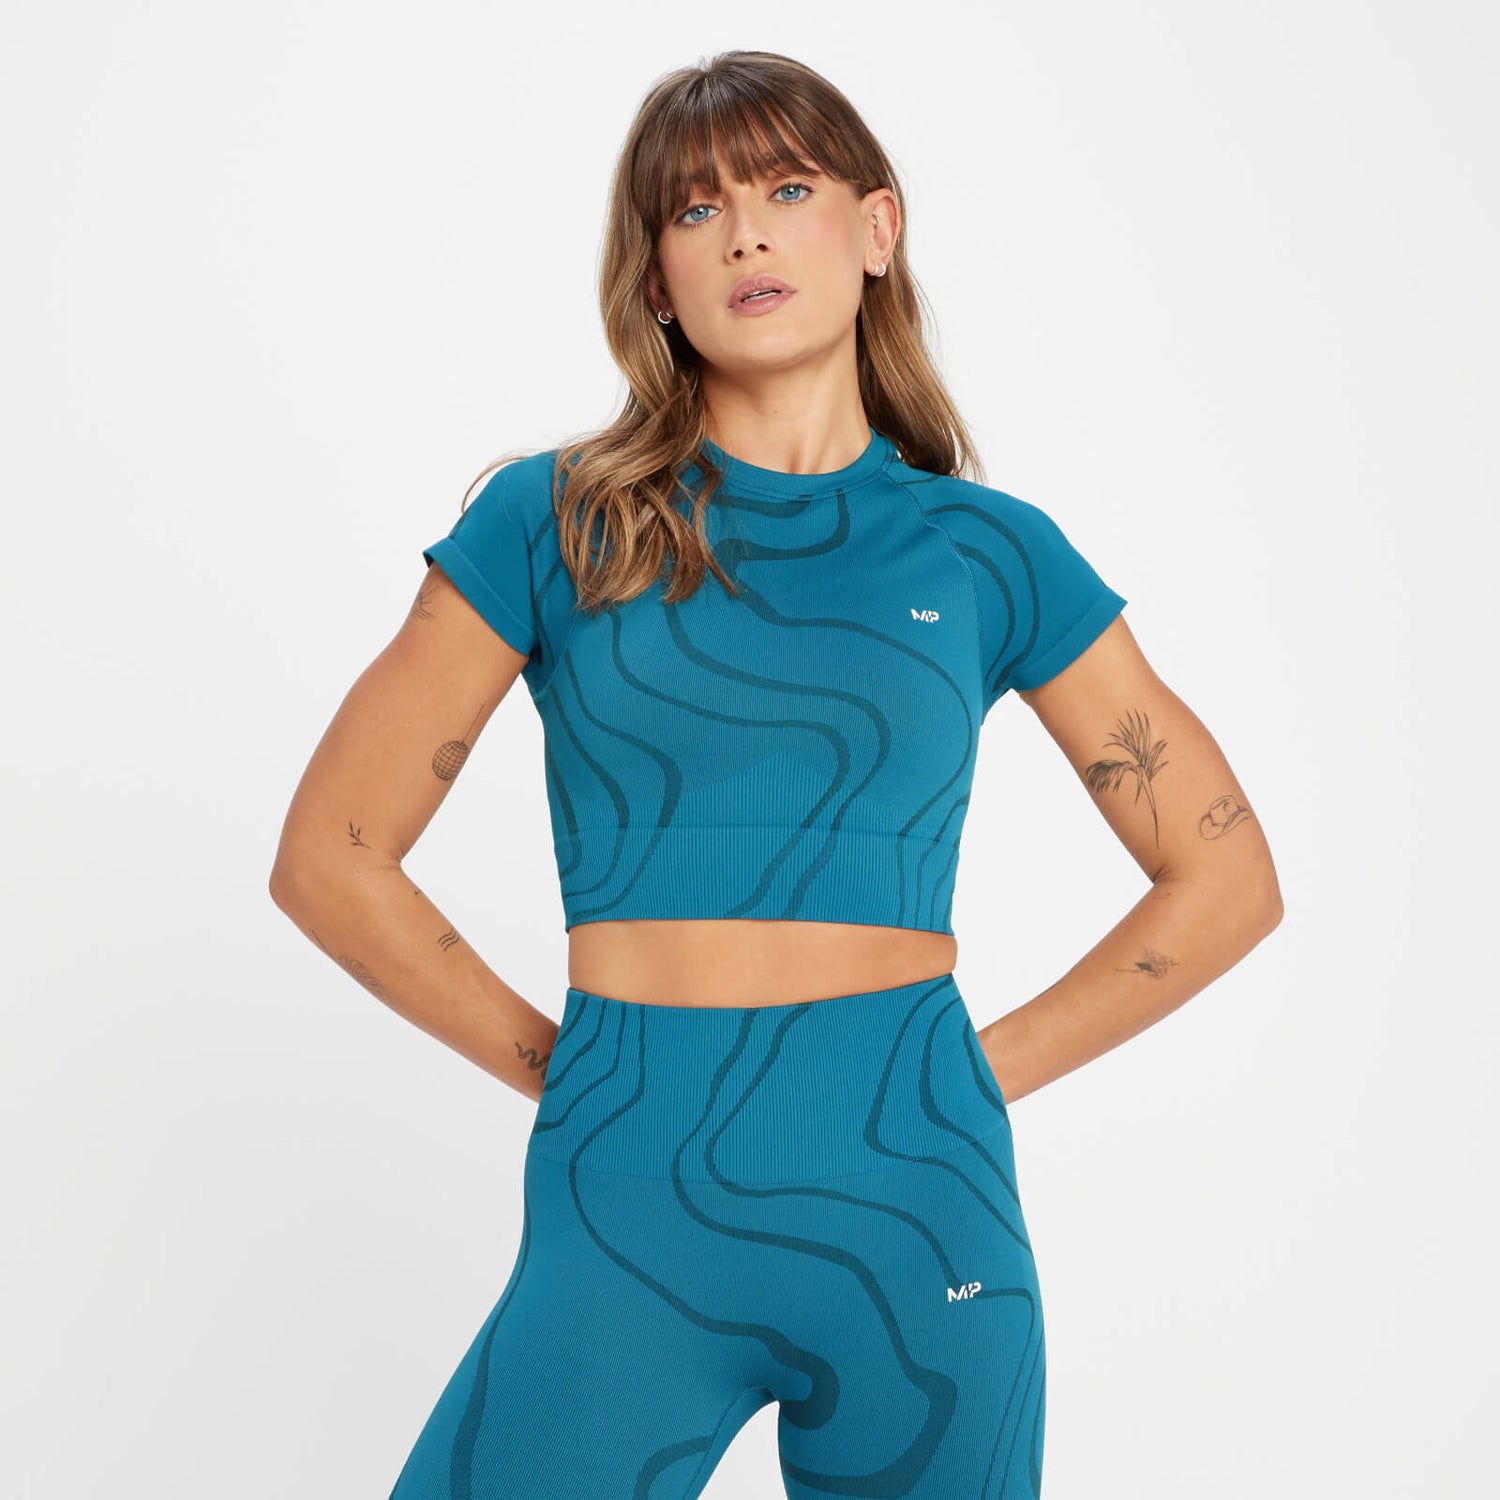 Camiseta corta sin costuras Tempo Wave para mujer de MP - Azul verde azulado - XXS